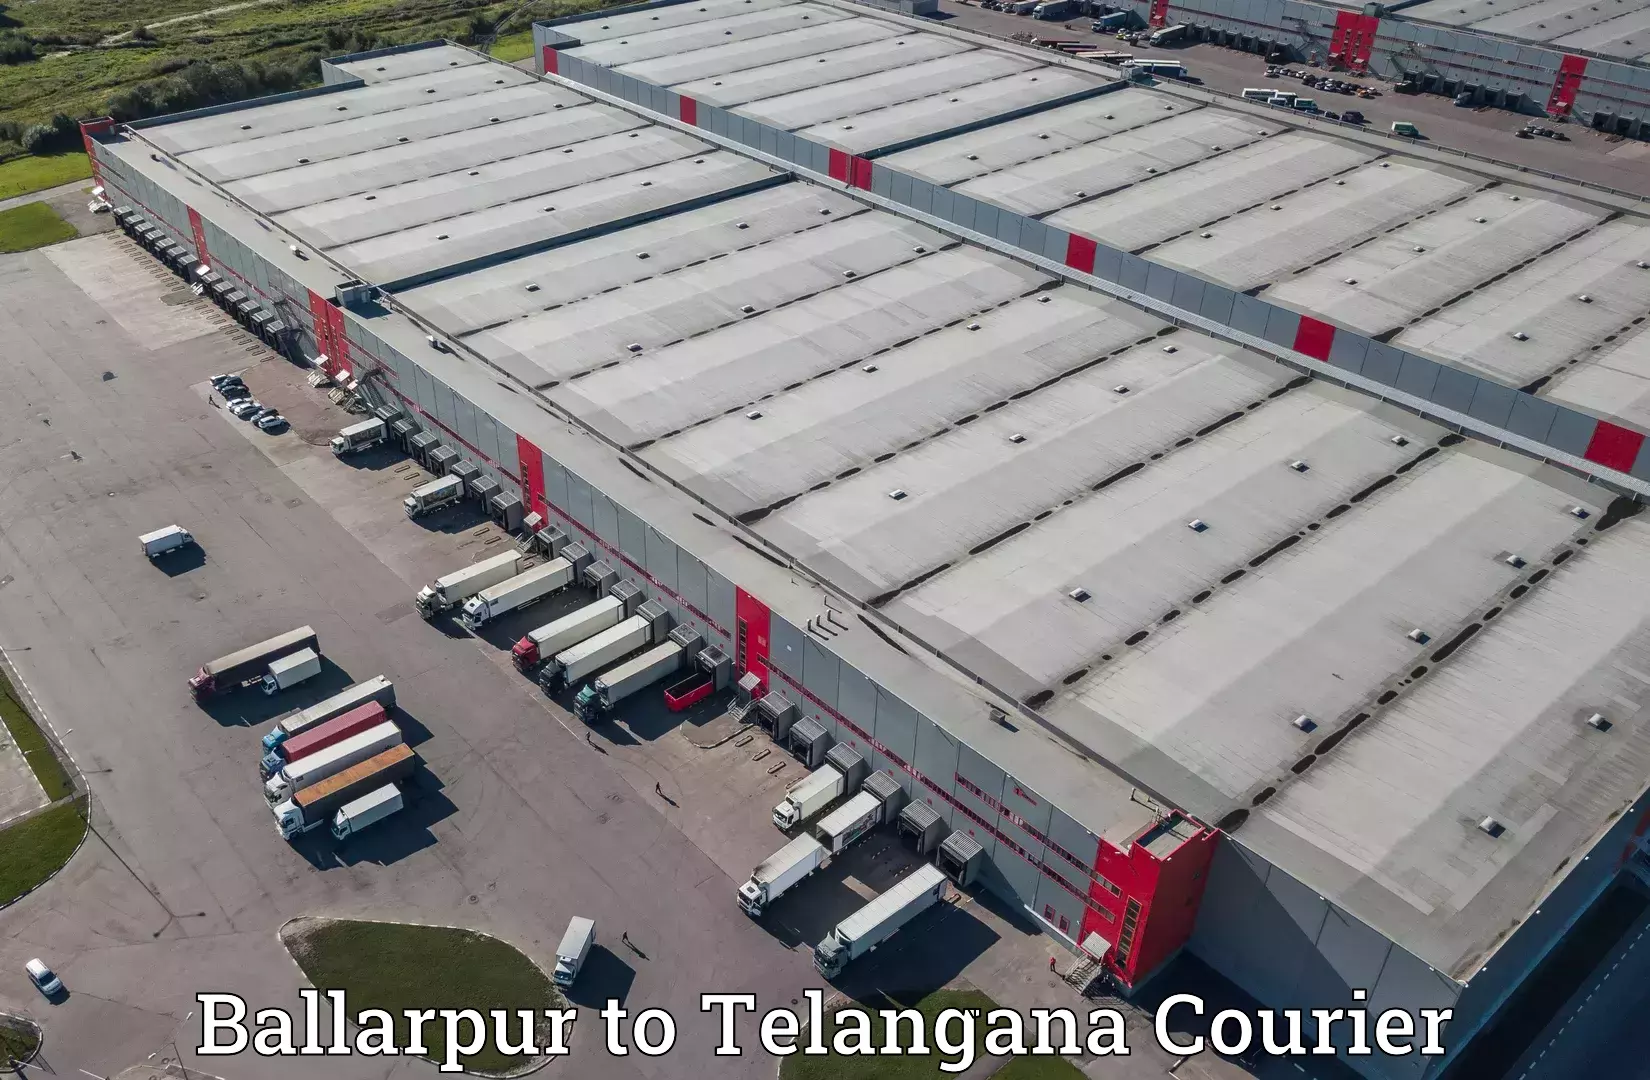 Express delivery capabilities Ballarpur to Vikarabad